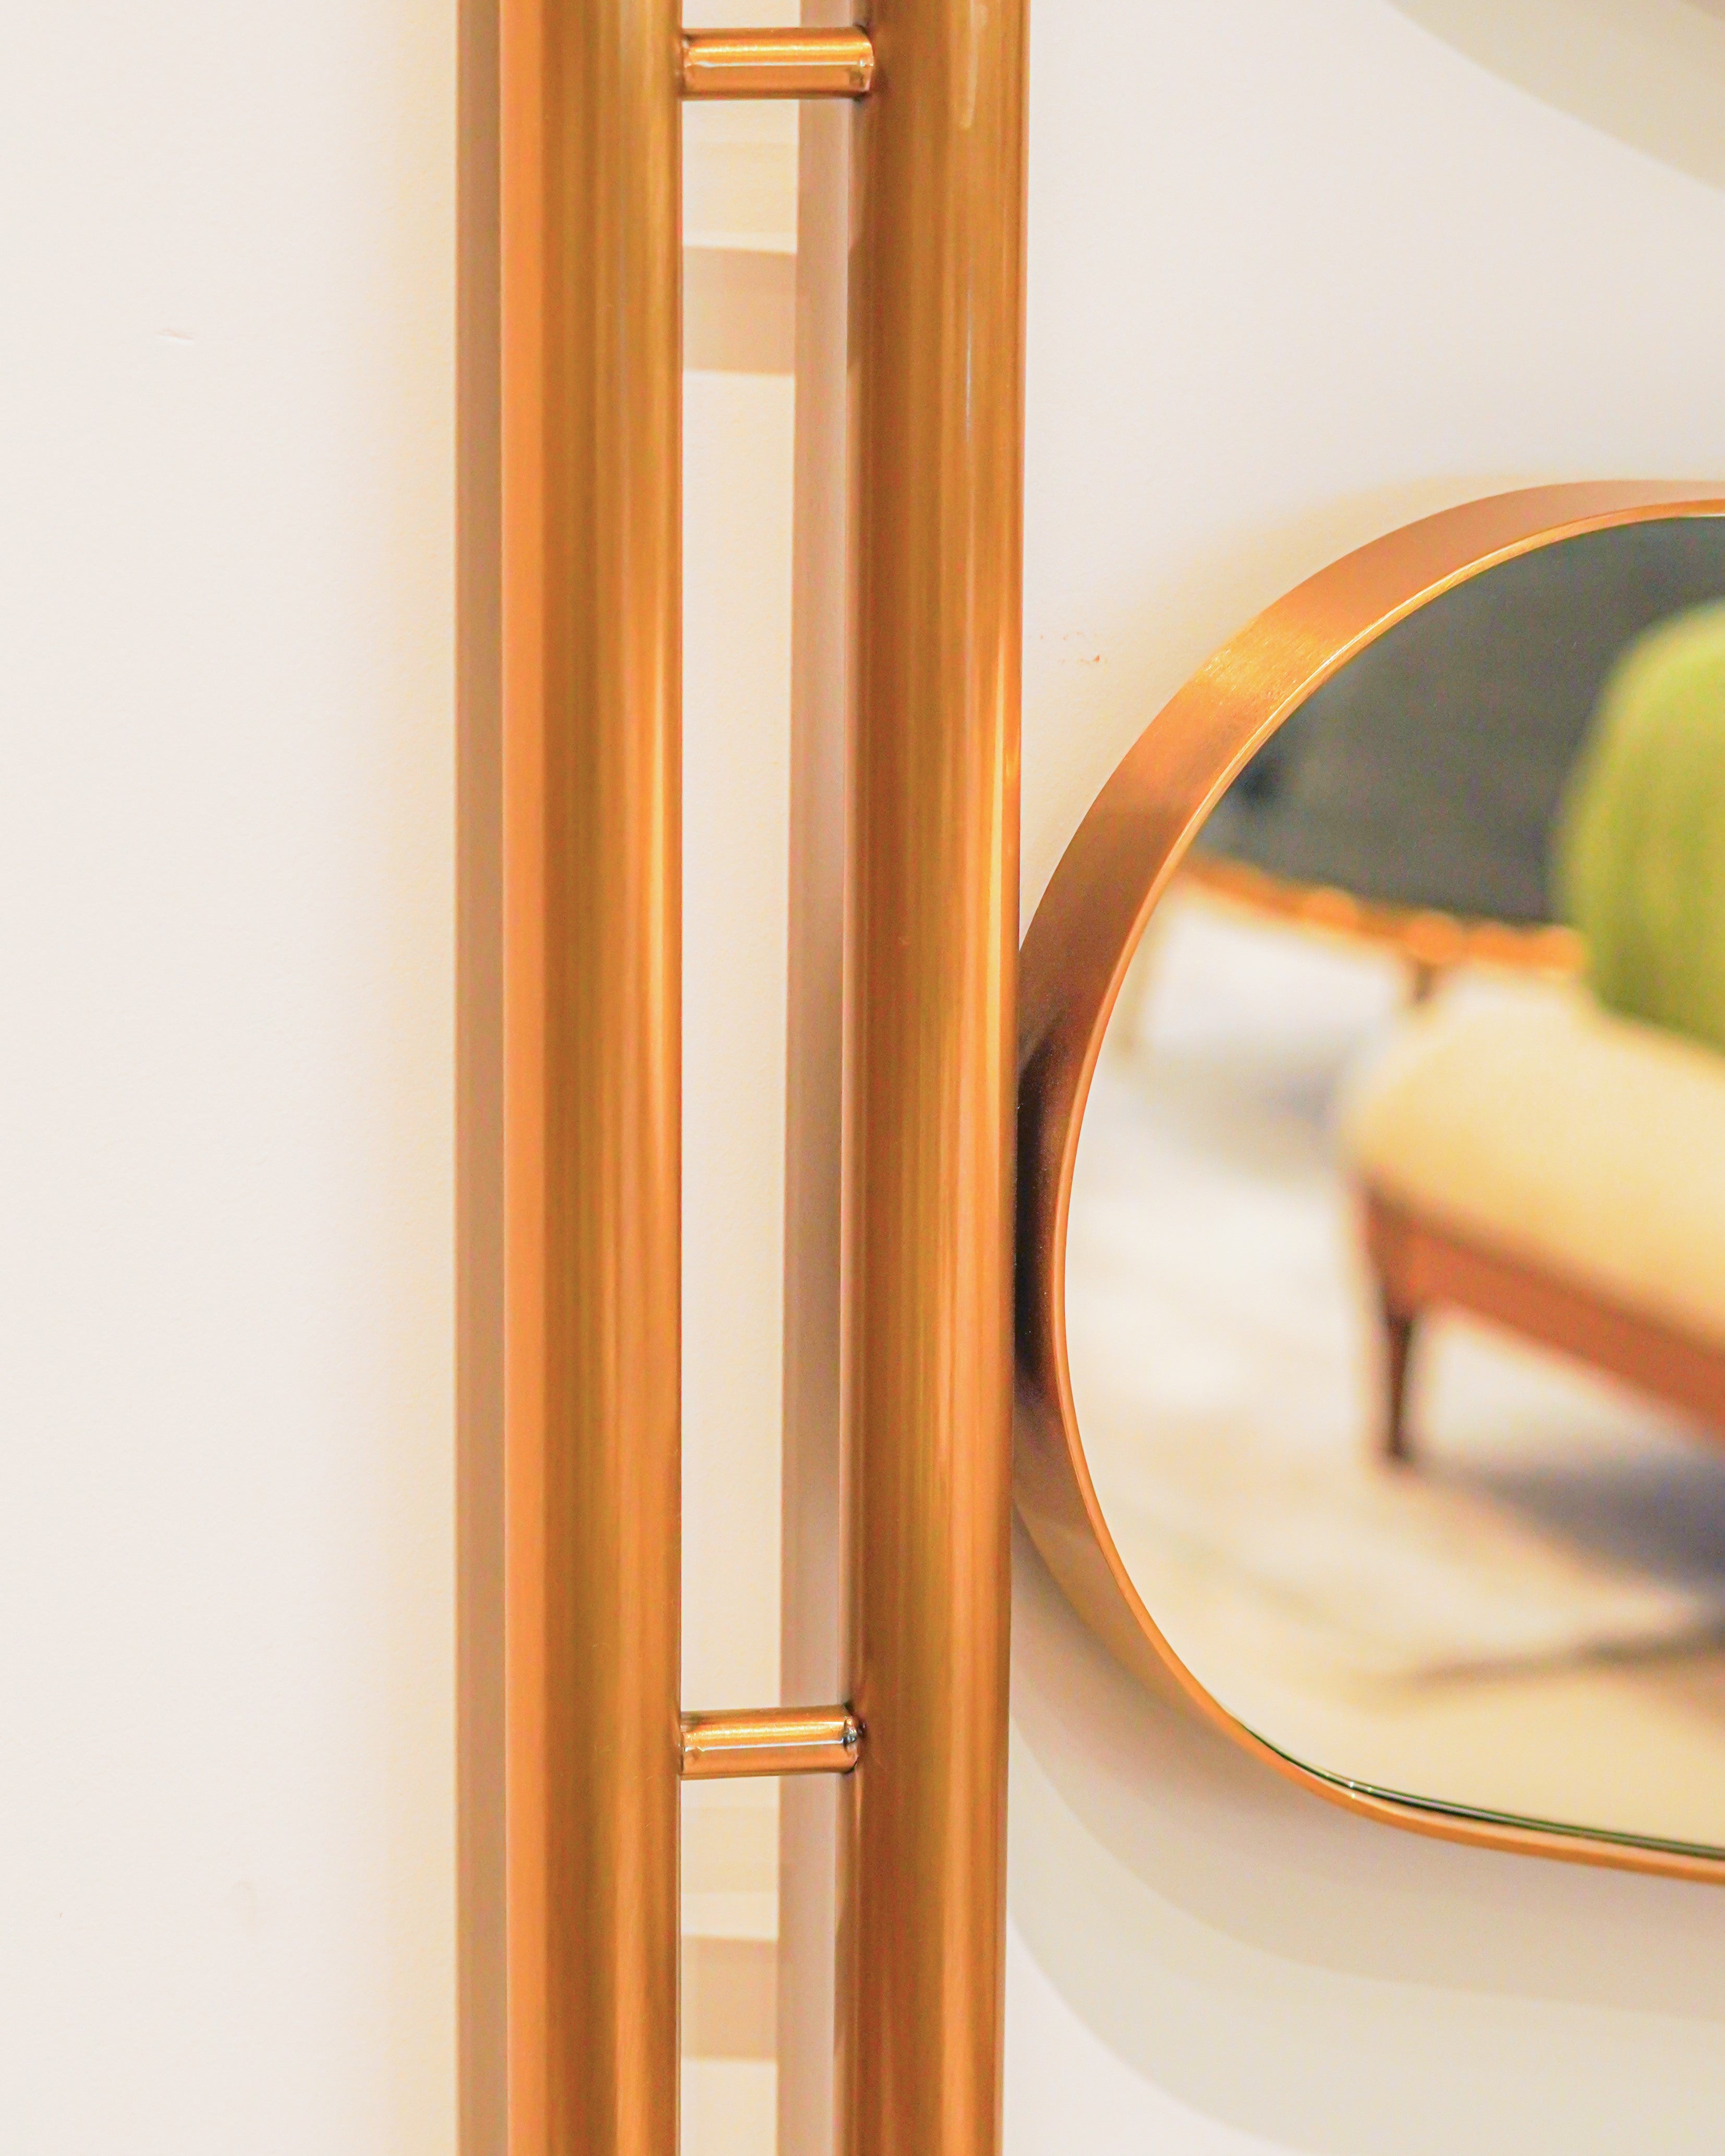 Three Elegant Wall Mirror - Gold